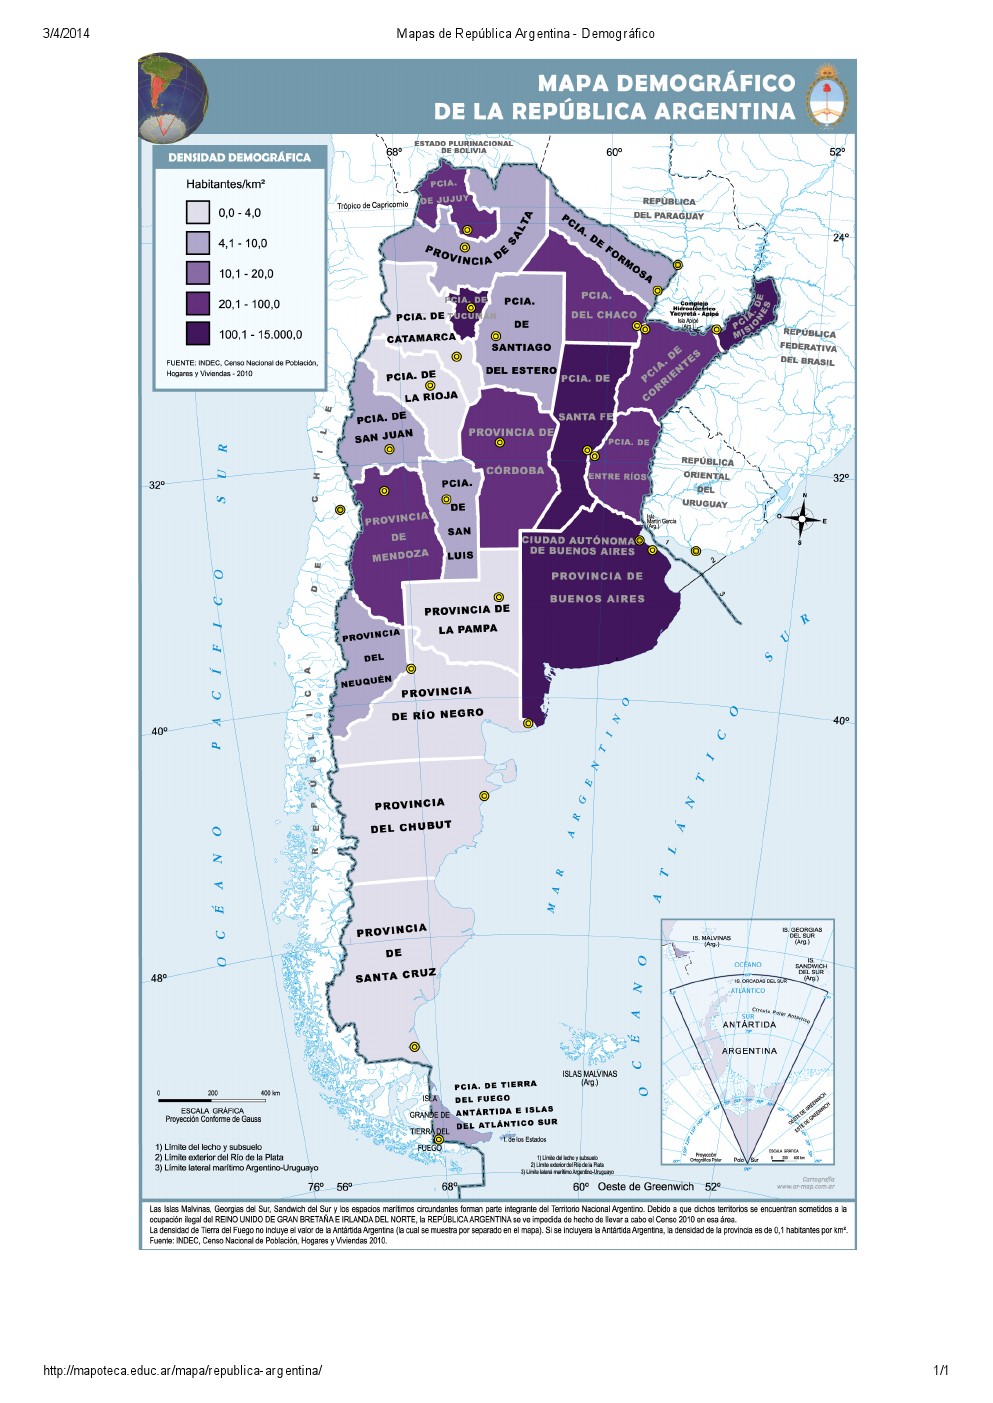 Mapa demográfico de Argentina. Mapoteca de Educ.ar